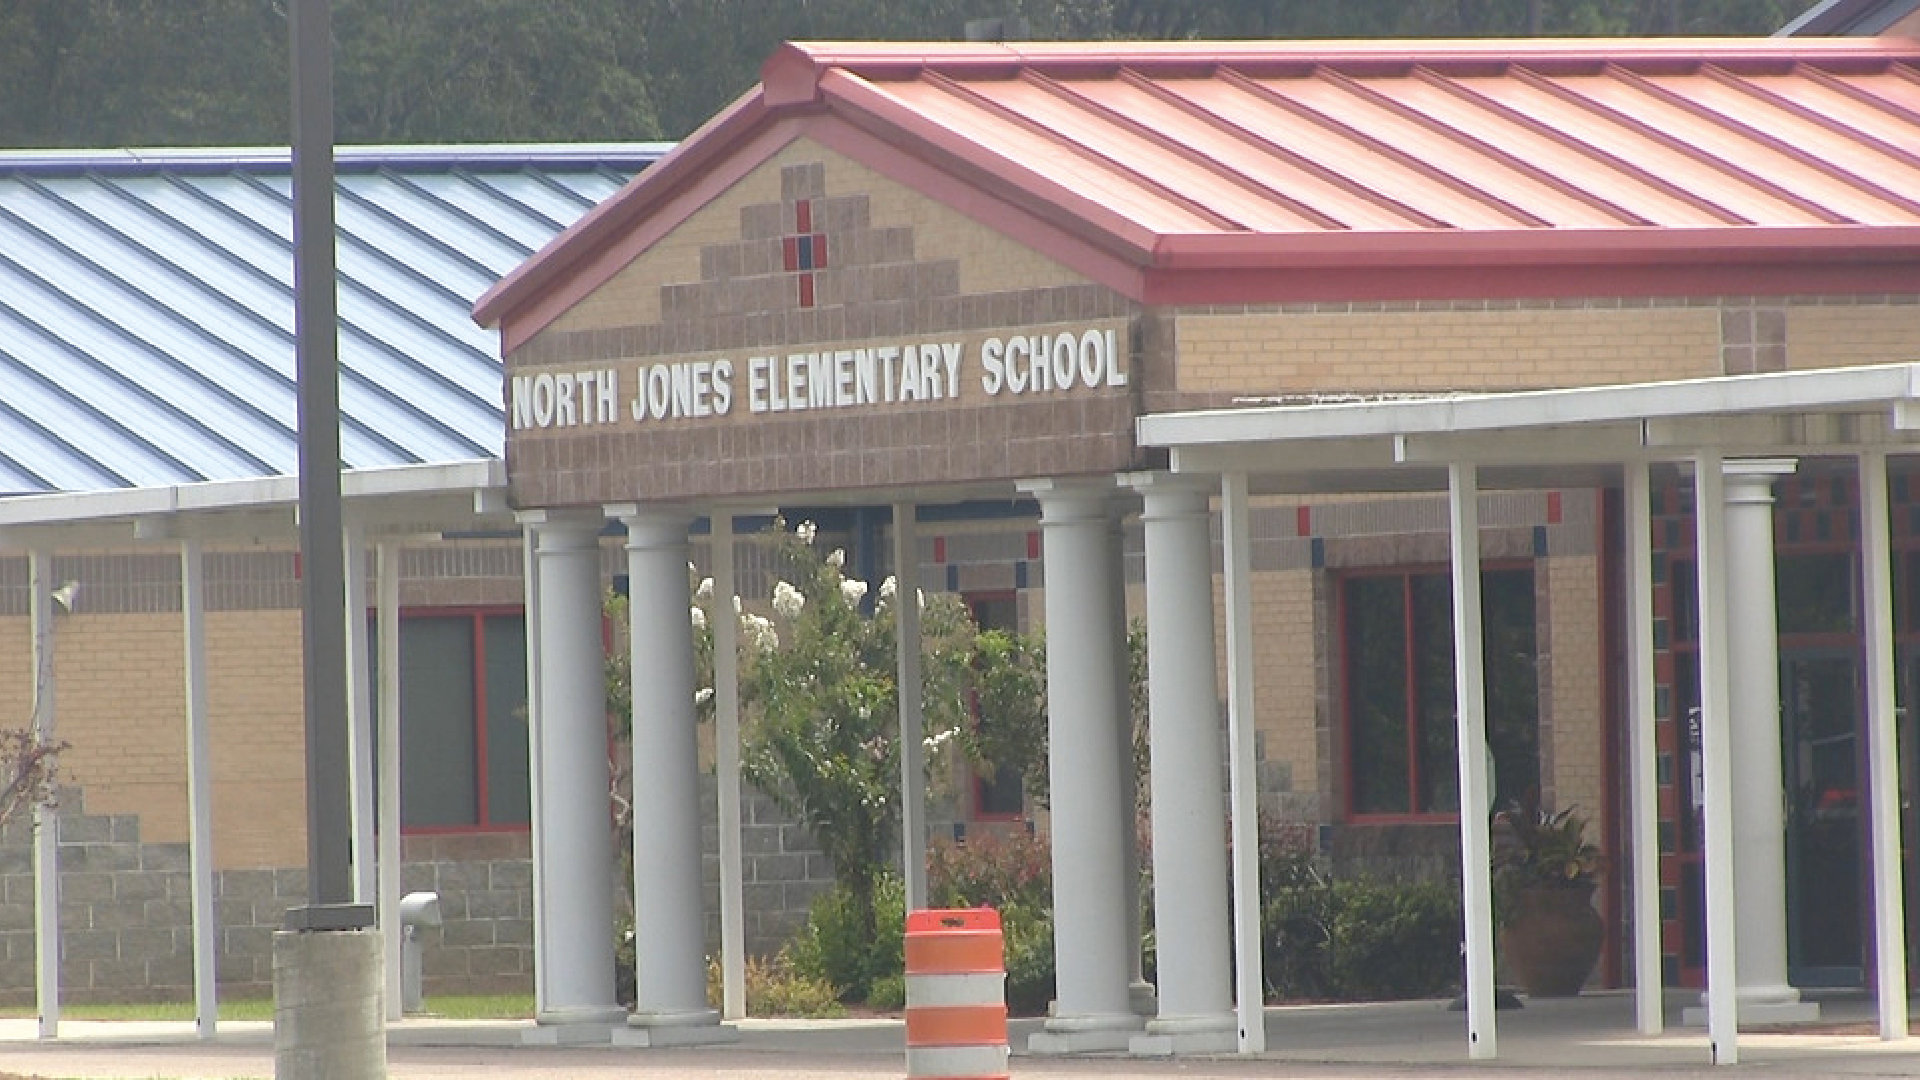 North Jones Elementary